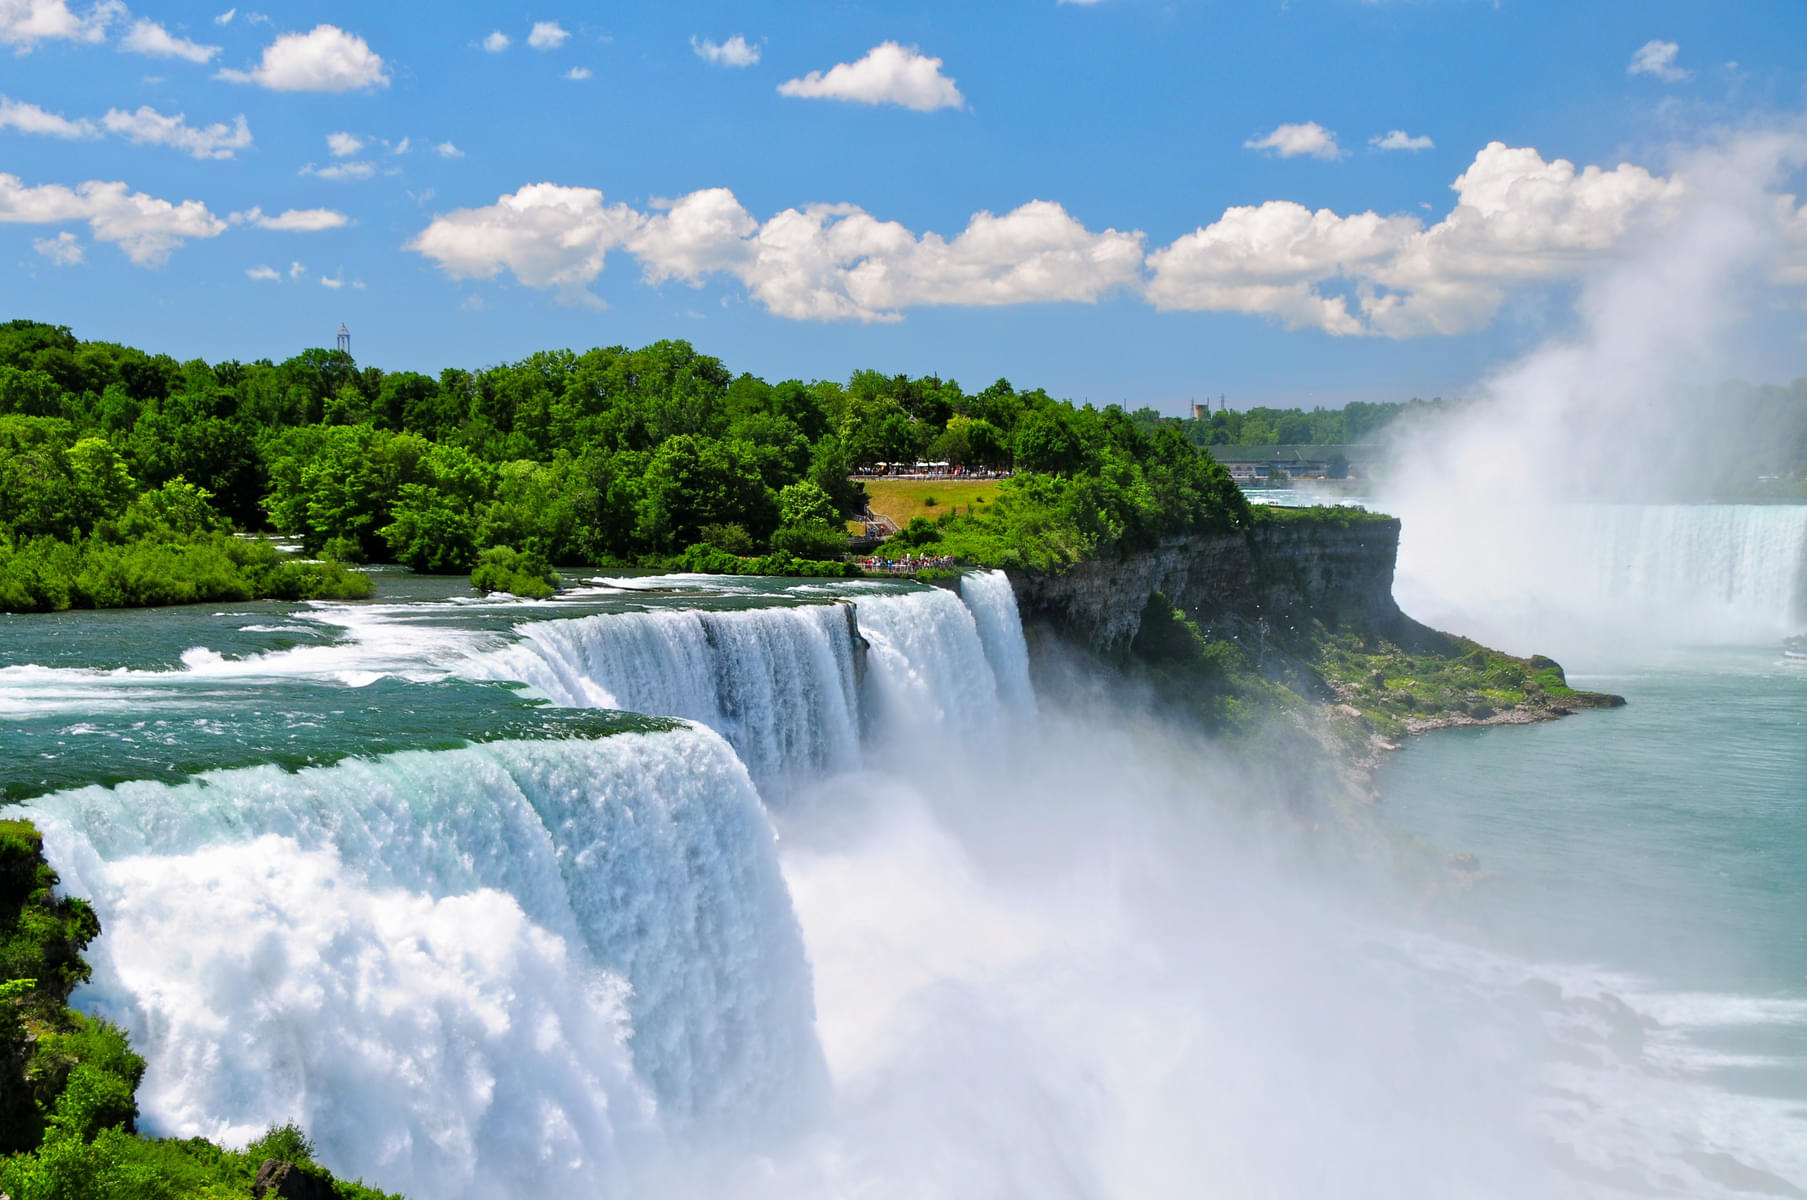 Visit the renowned Niagara Falls State Park